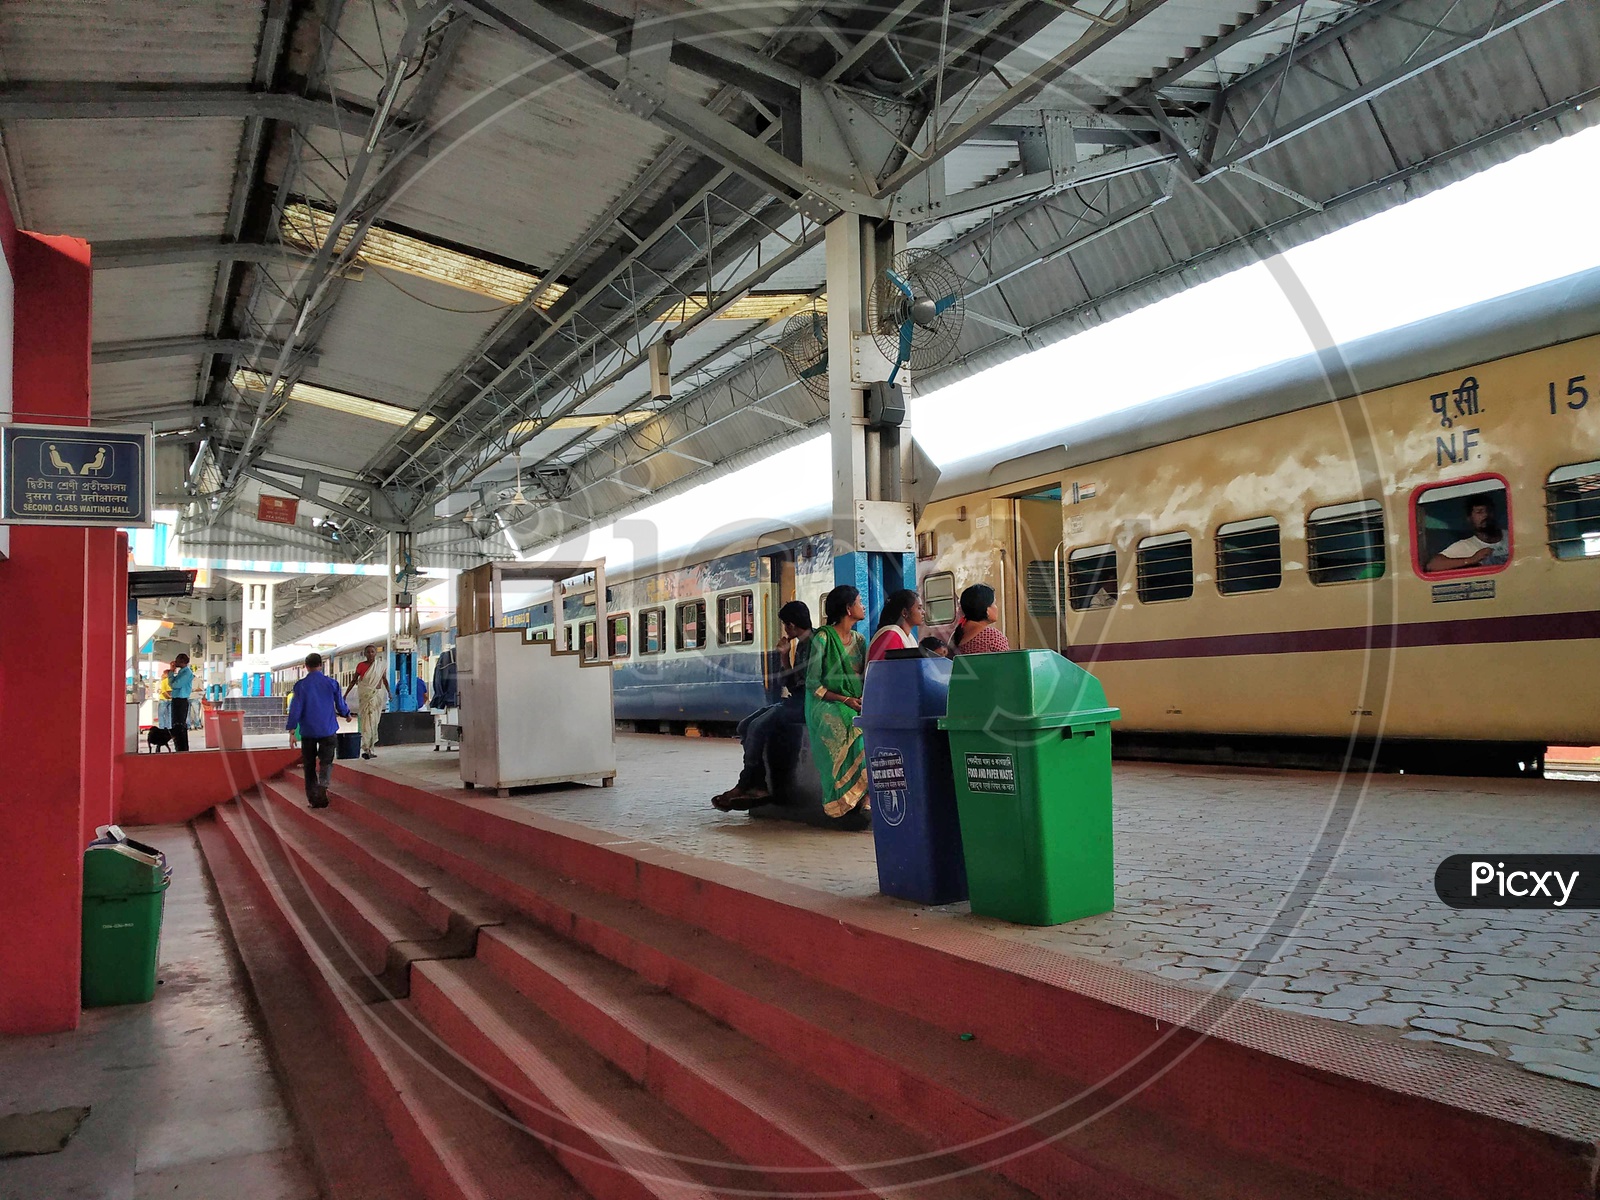 Indian Railways Train Standing on Track In a Railway Station Platform